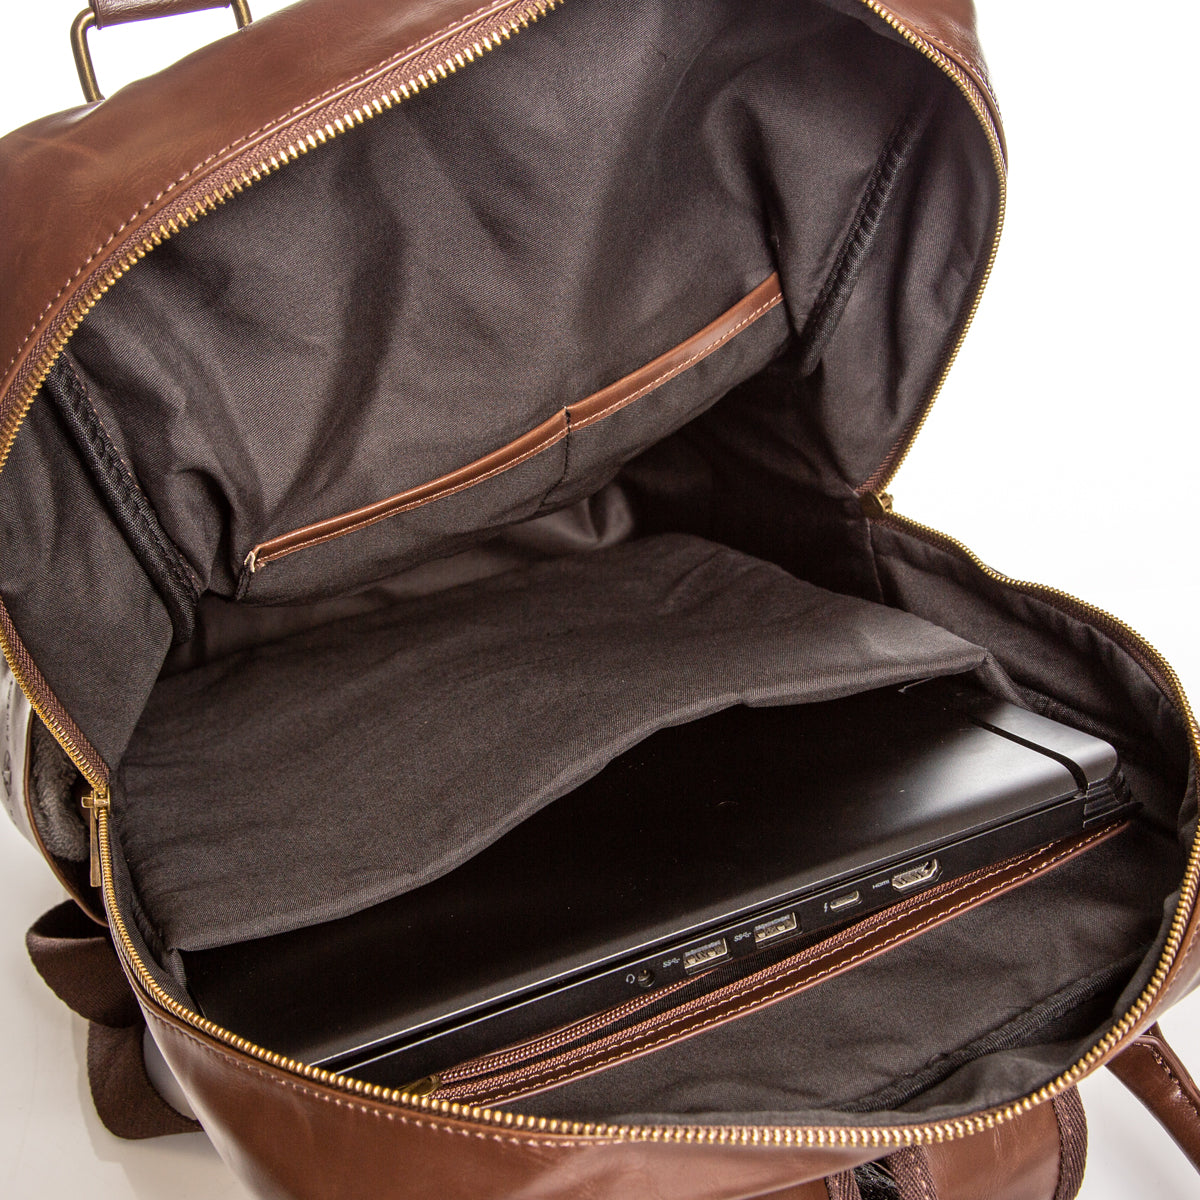 Branded Laptop Backpack - Inside View